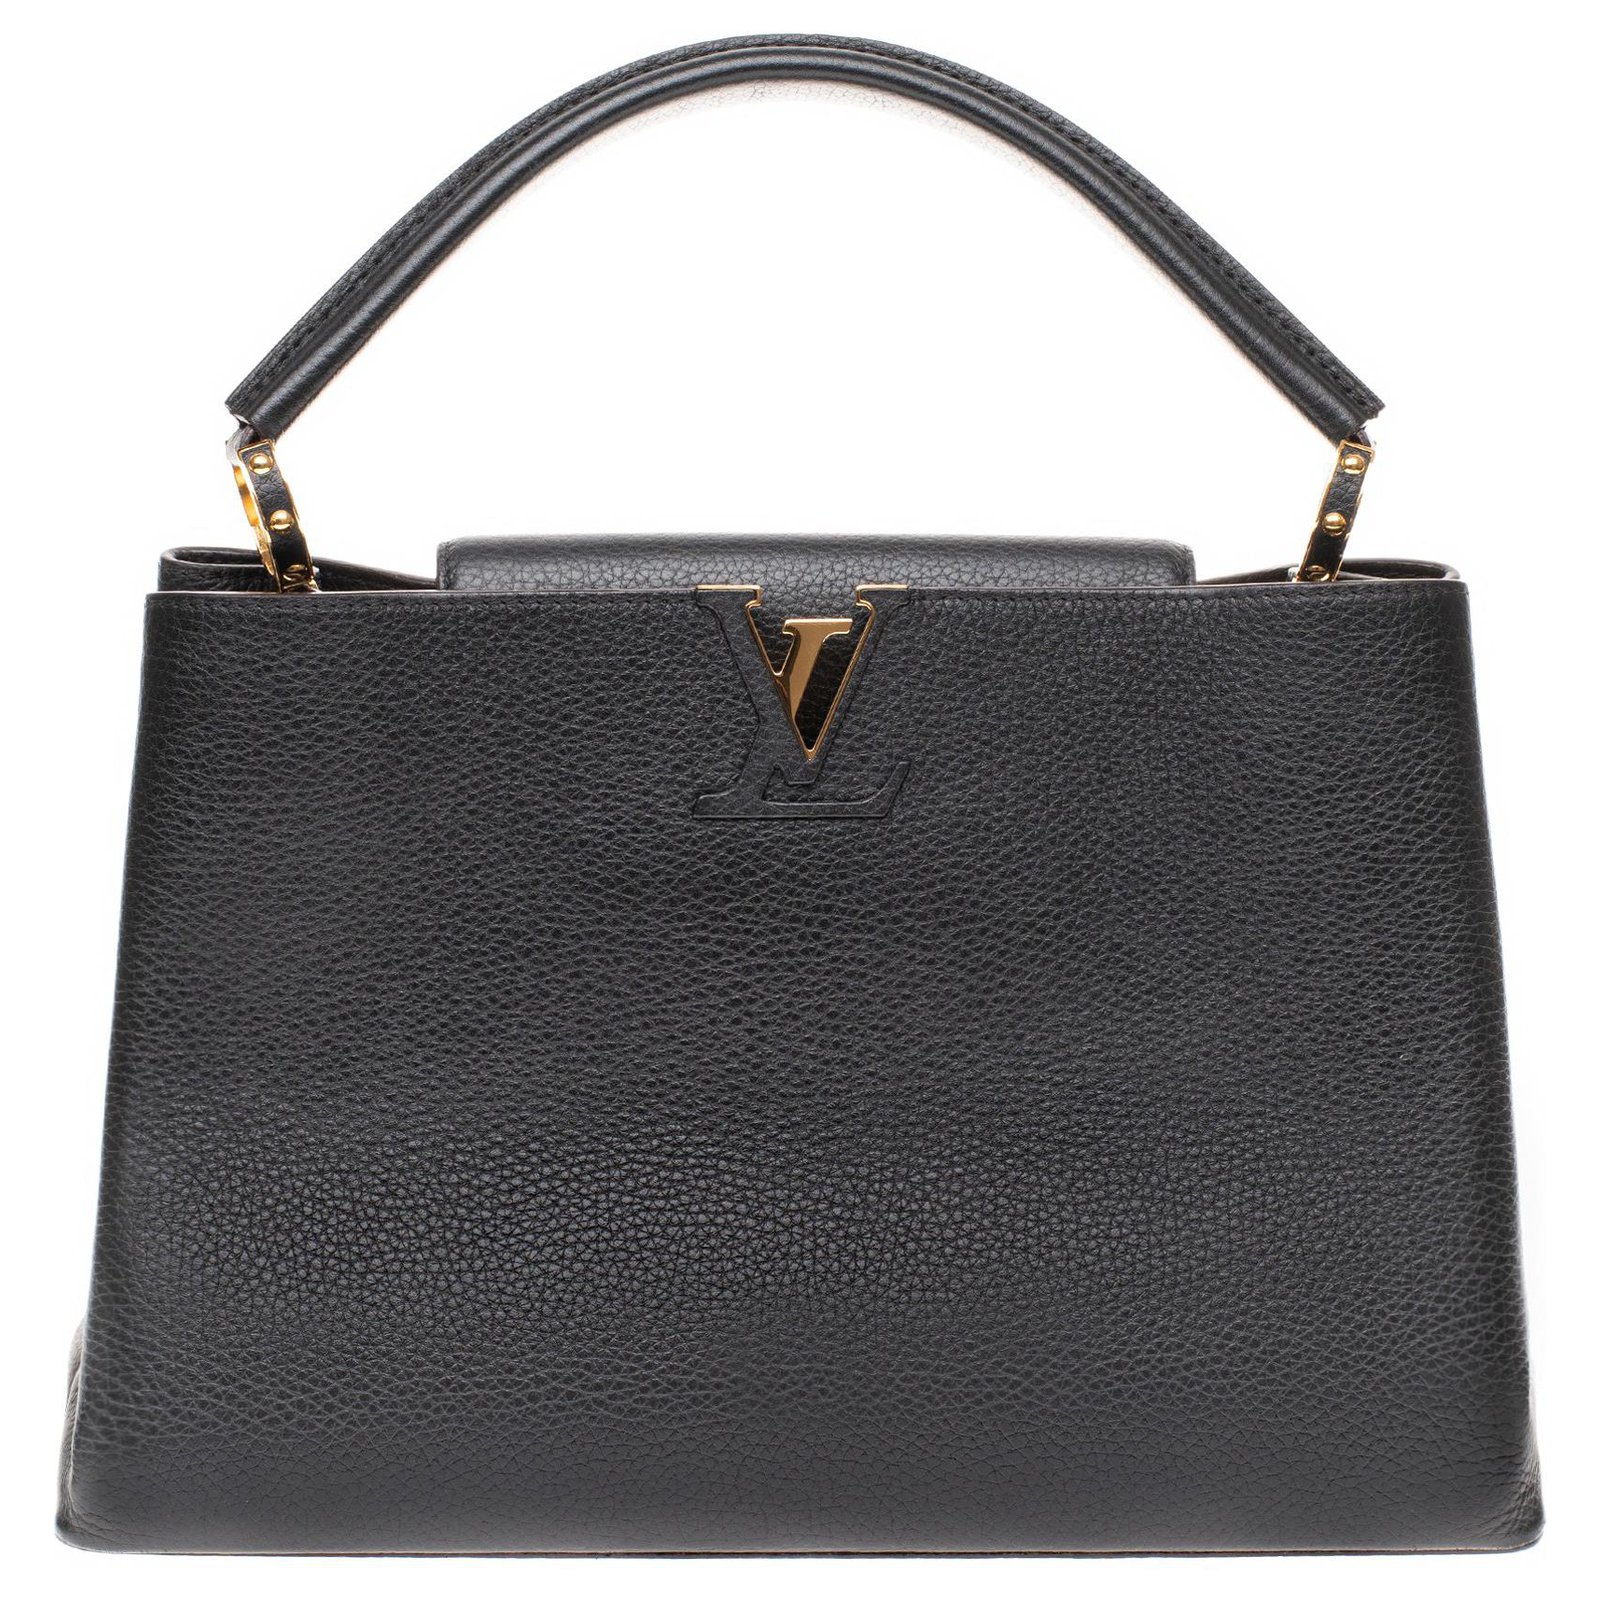 Superb Louis Vuitton Capucines MM bag in black bull in excellent ...